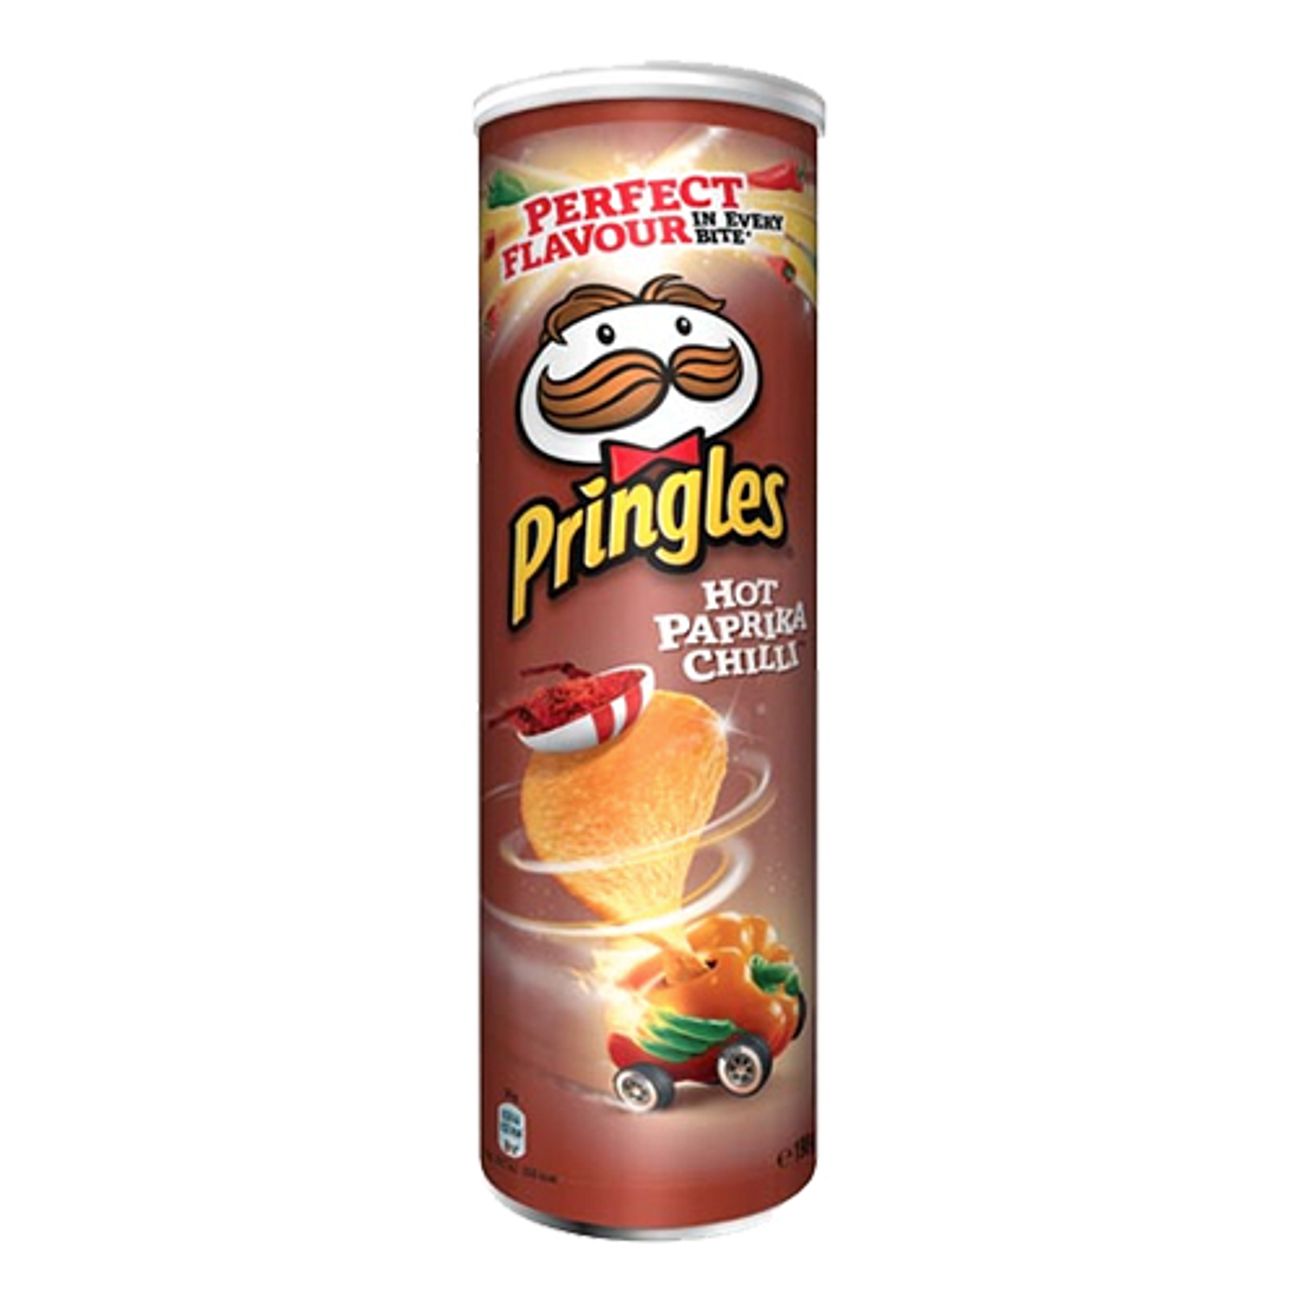 pringles-hot-paprika-chili-1